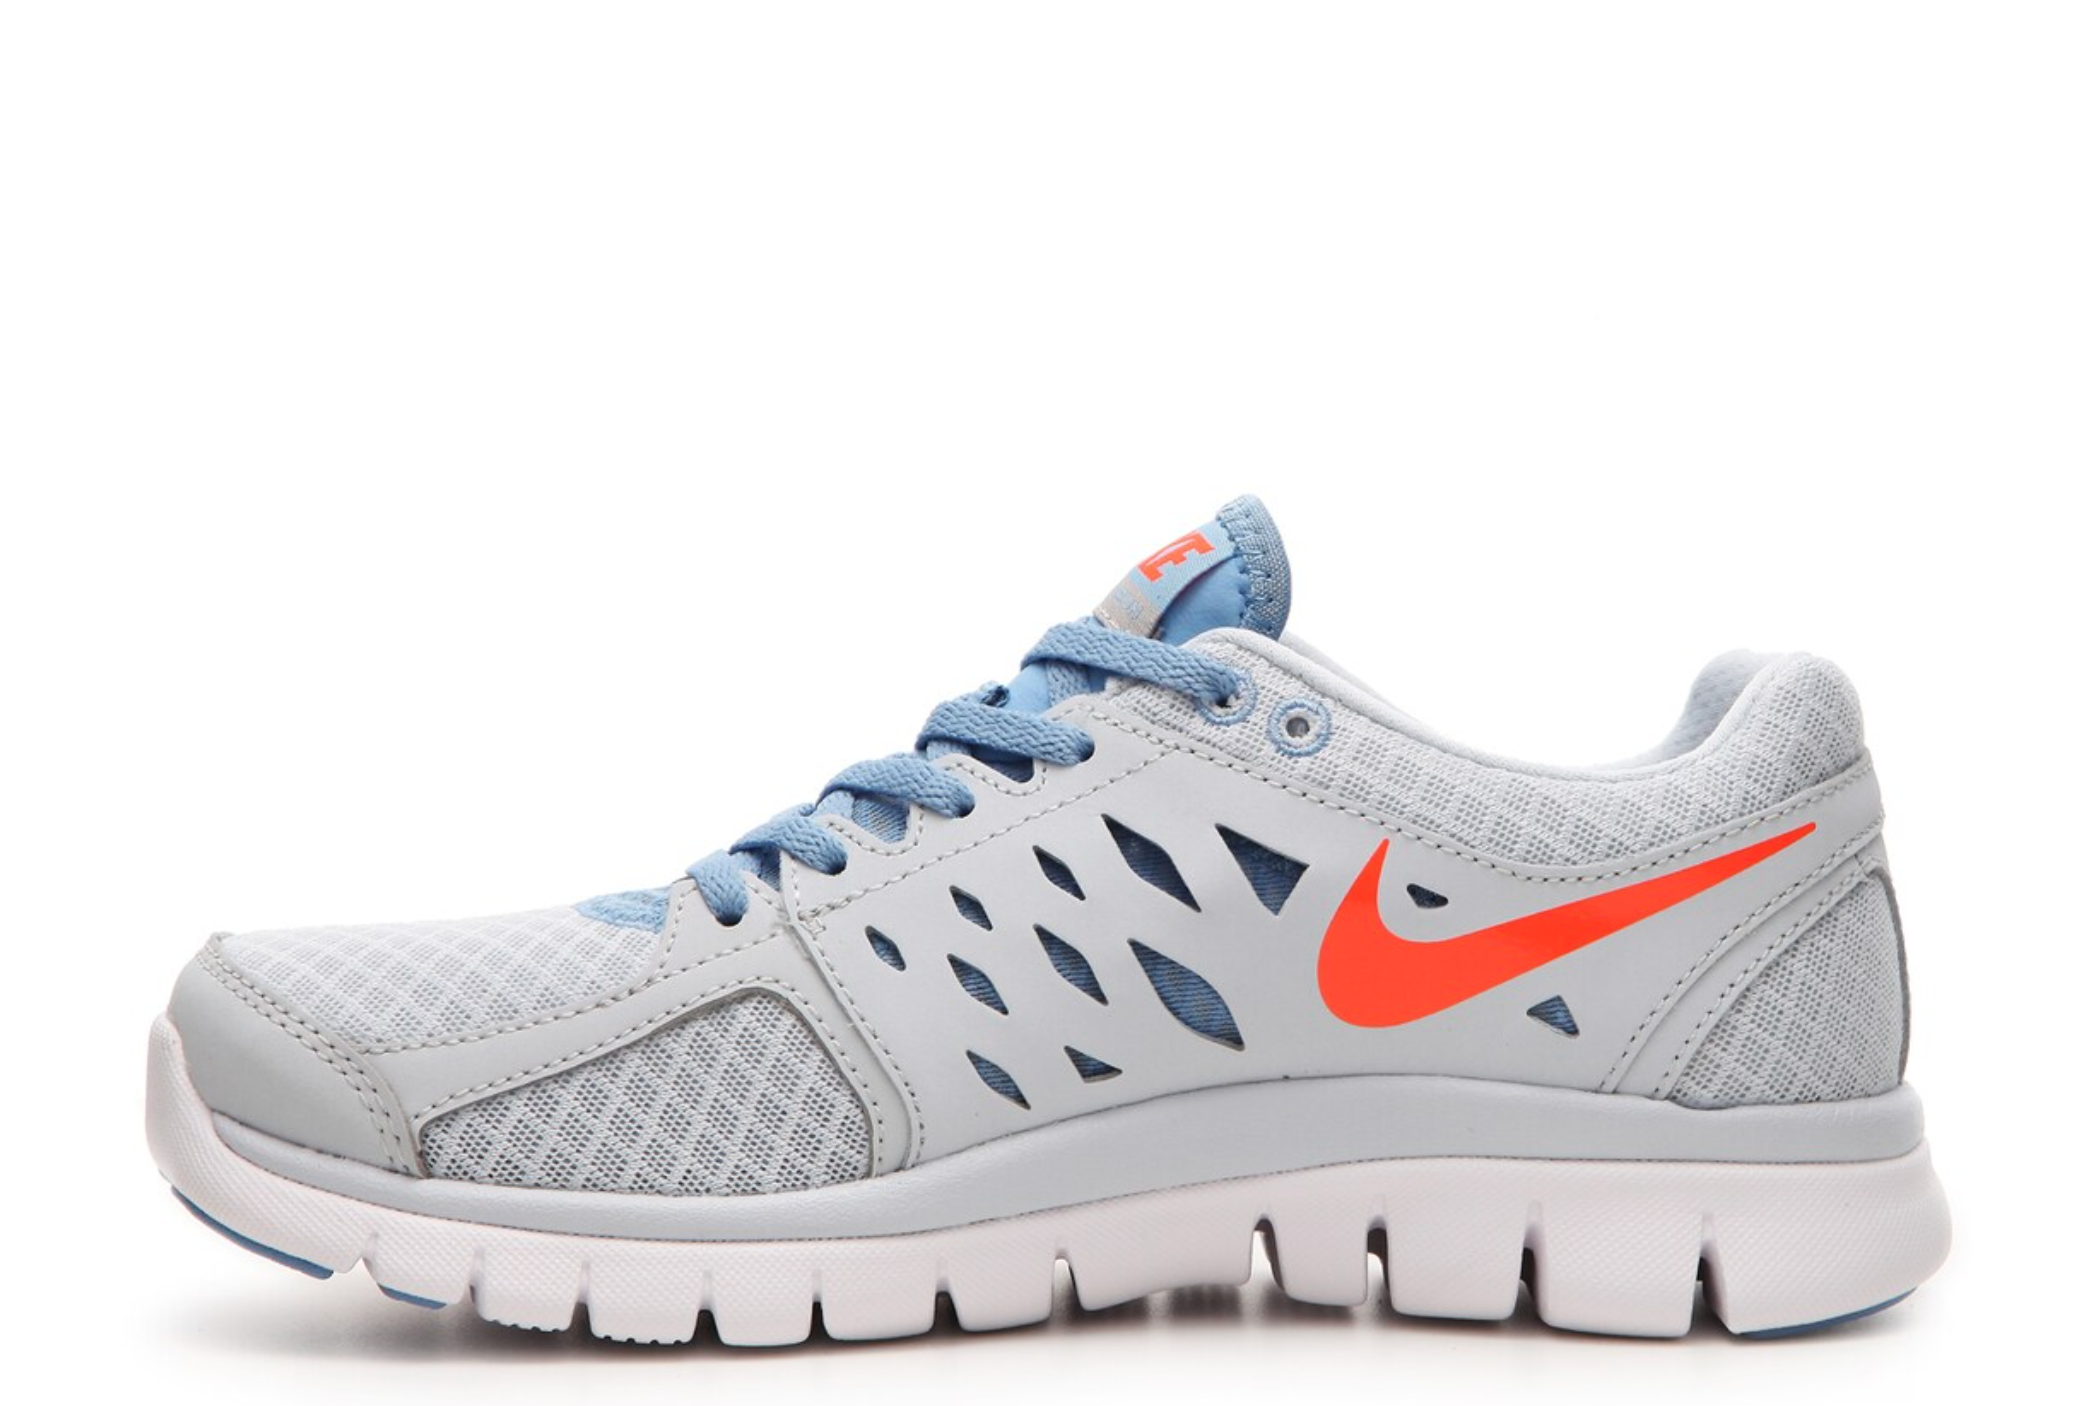 Centelleo Lavandería a monedas Suavemente Nike Flex Run 2013 Lightweight Running Shoes in Grey — UFO No More